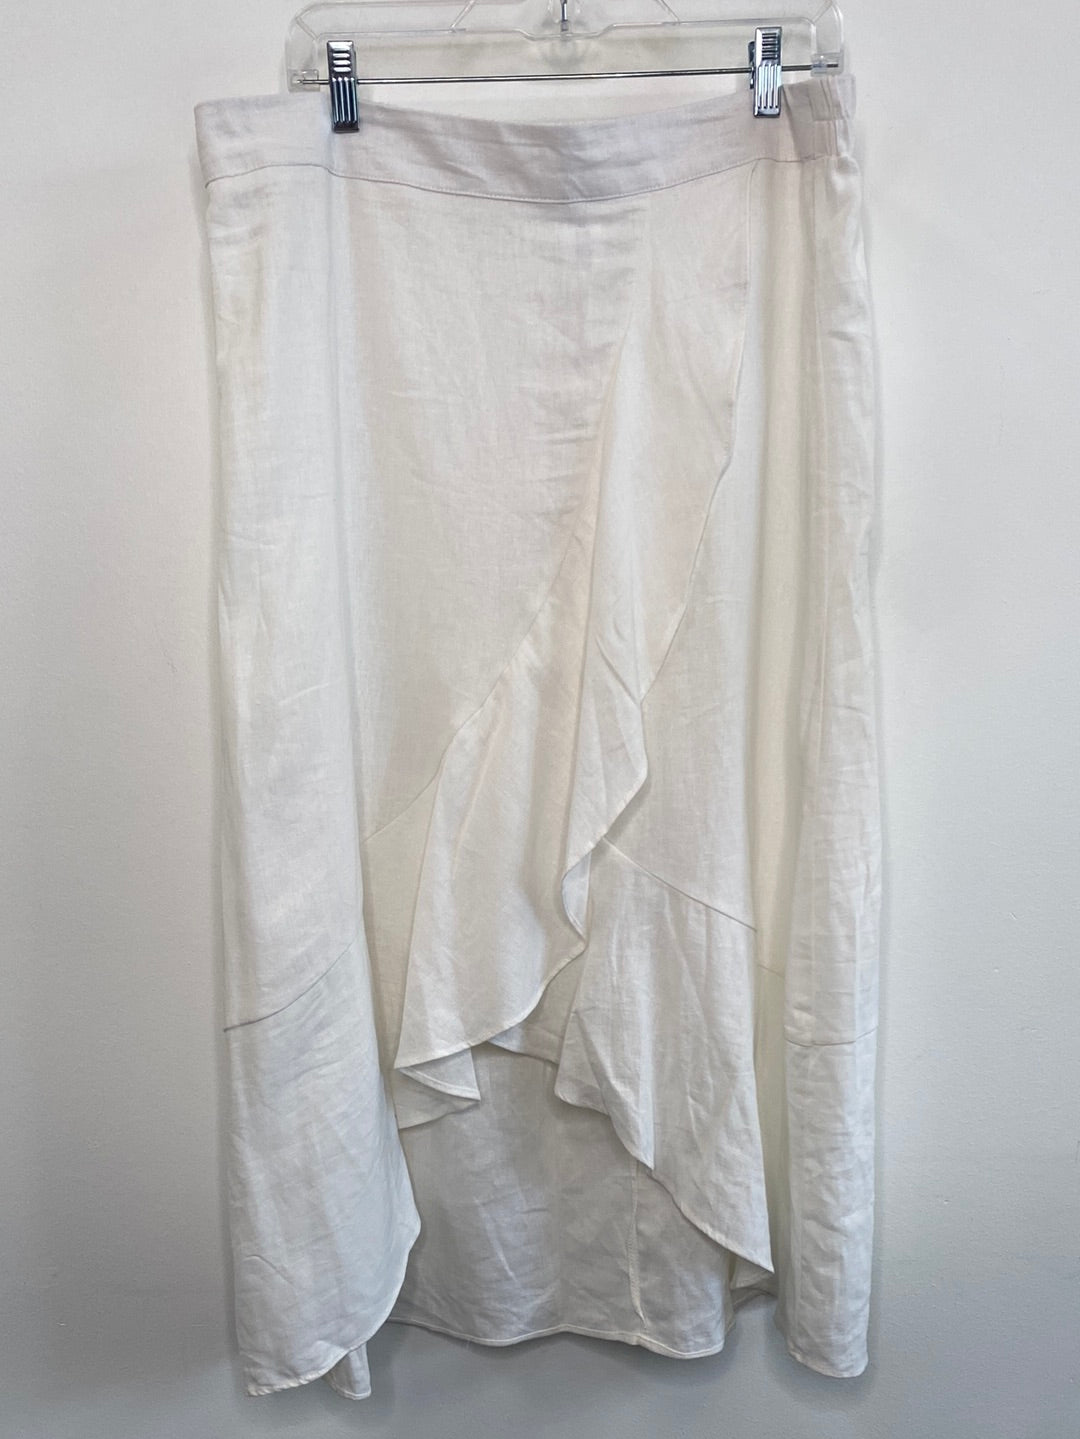 Westport Ruffled Waterfall Maxi Skirt (XL)